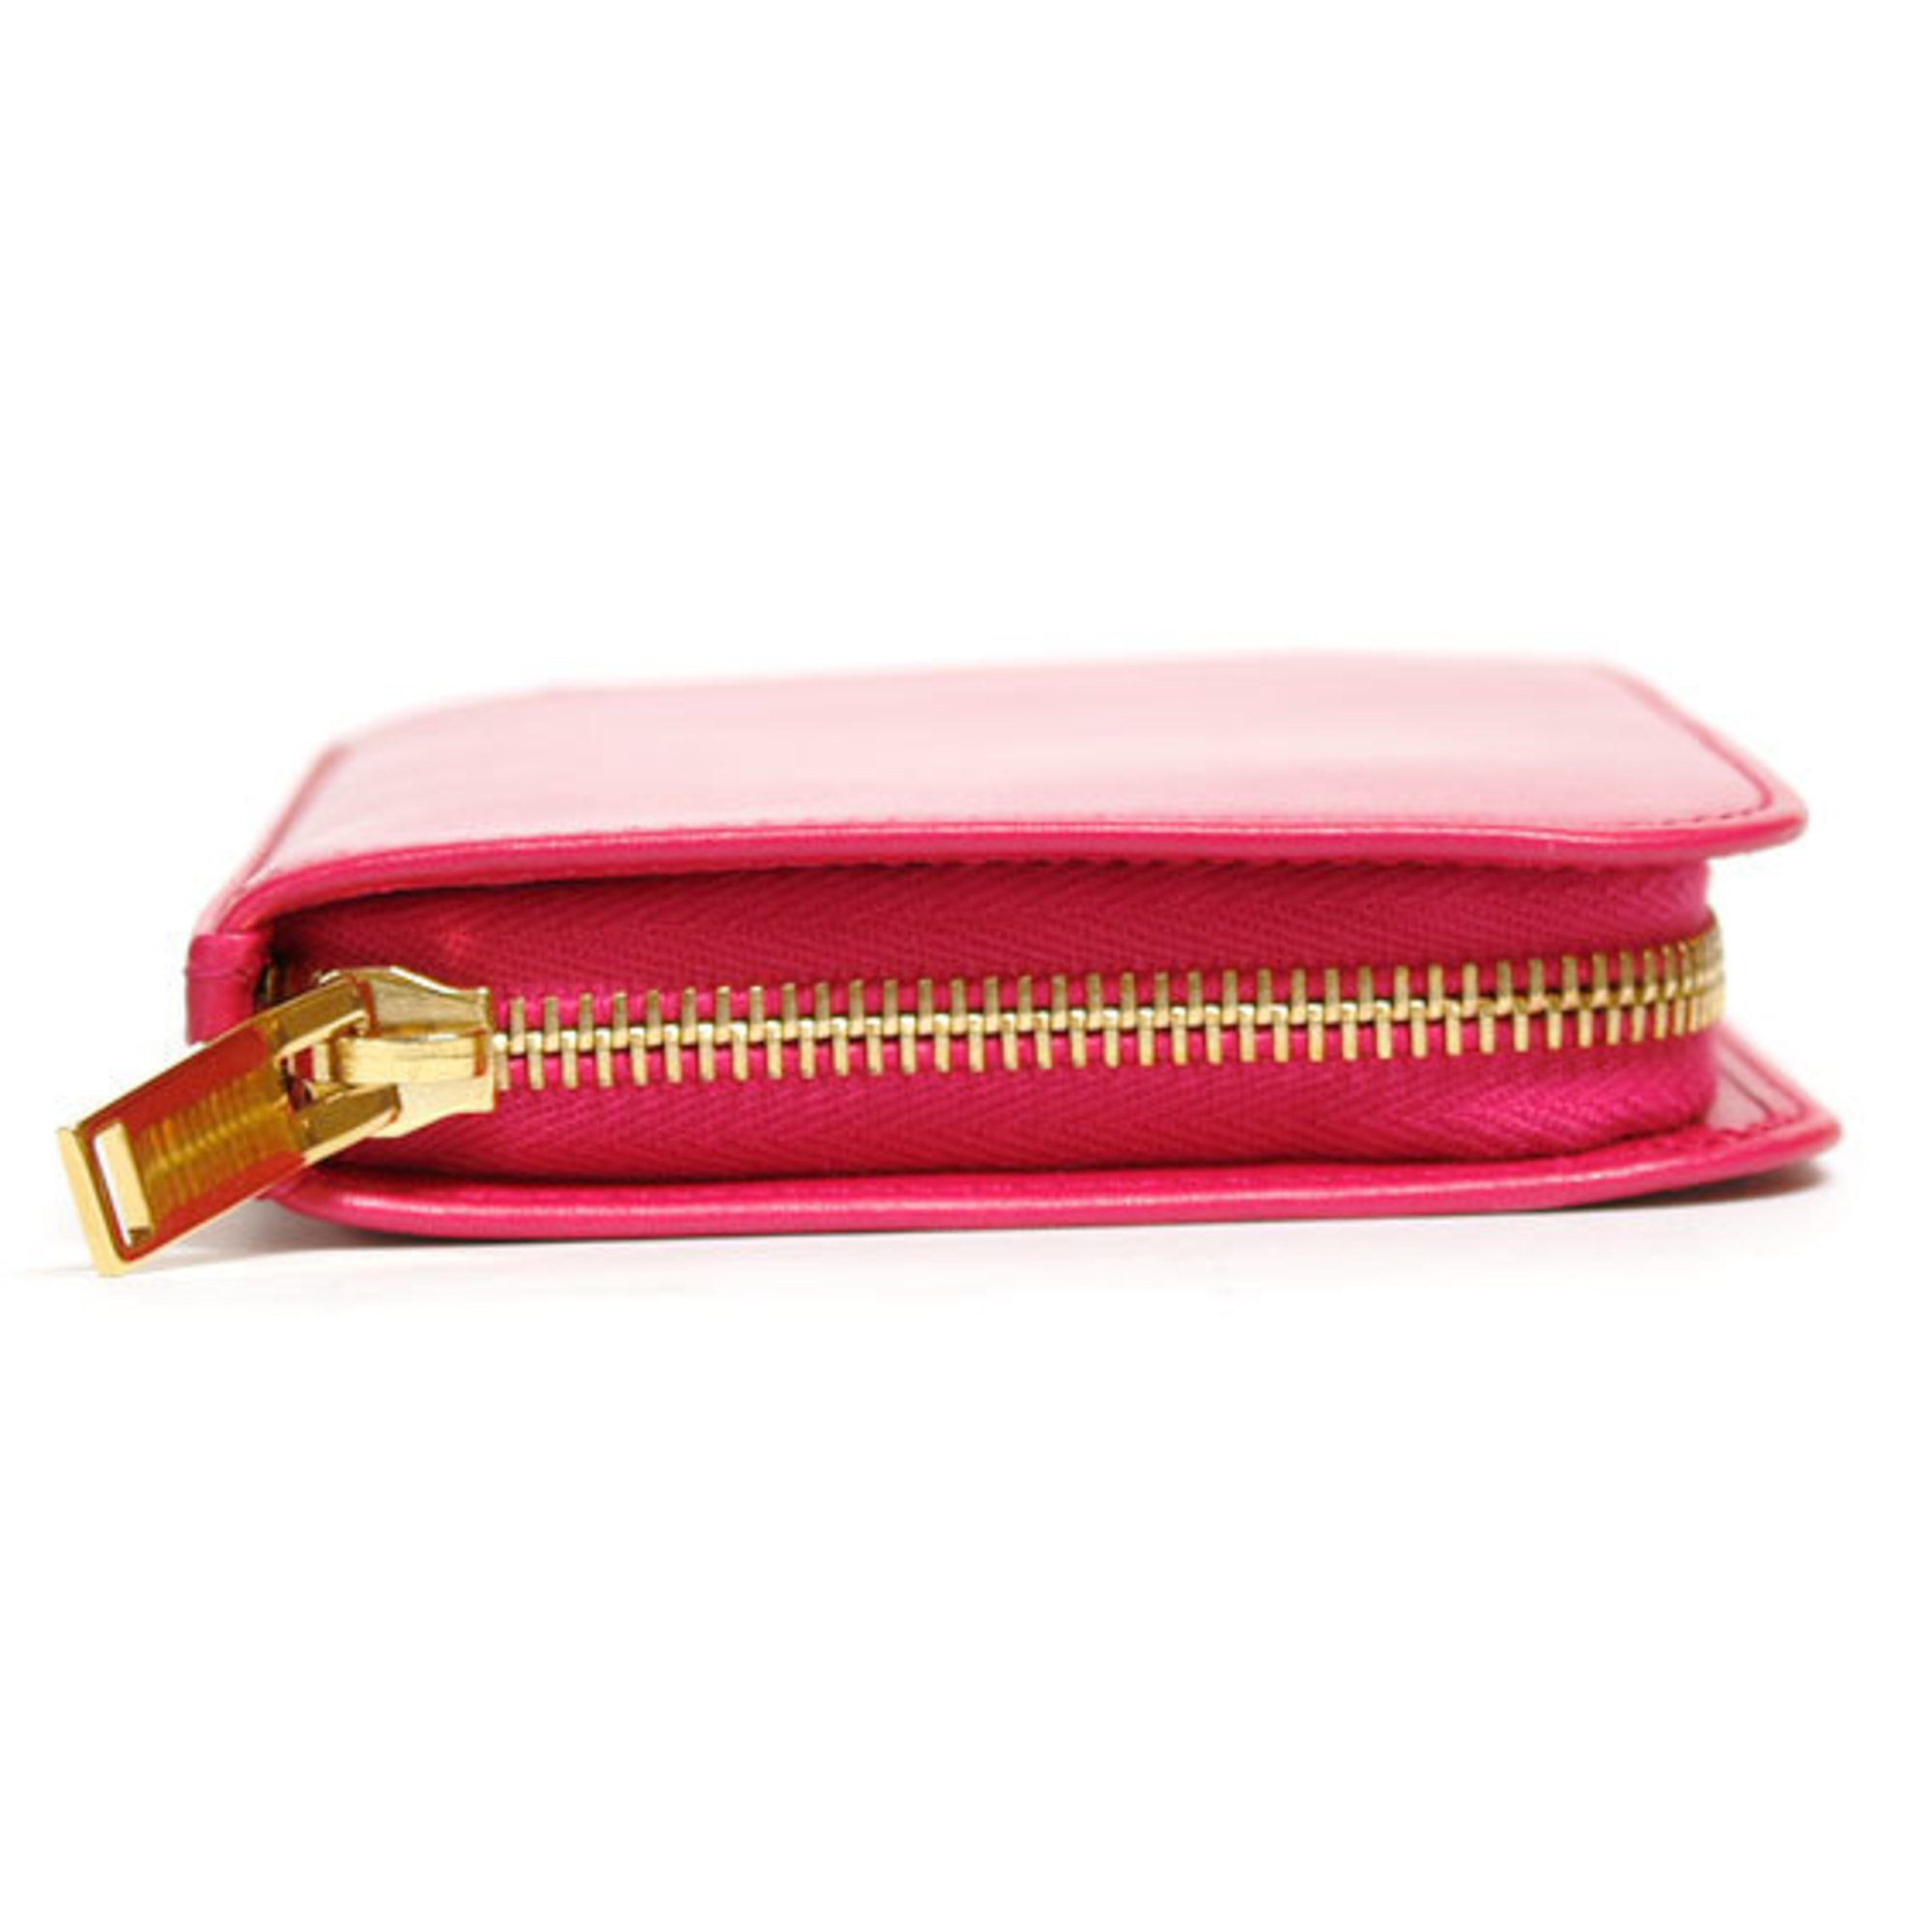 SAINT LAURENT round wallet fuchsia pink 326599 ladies special price